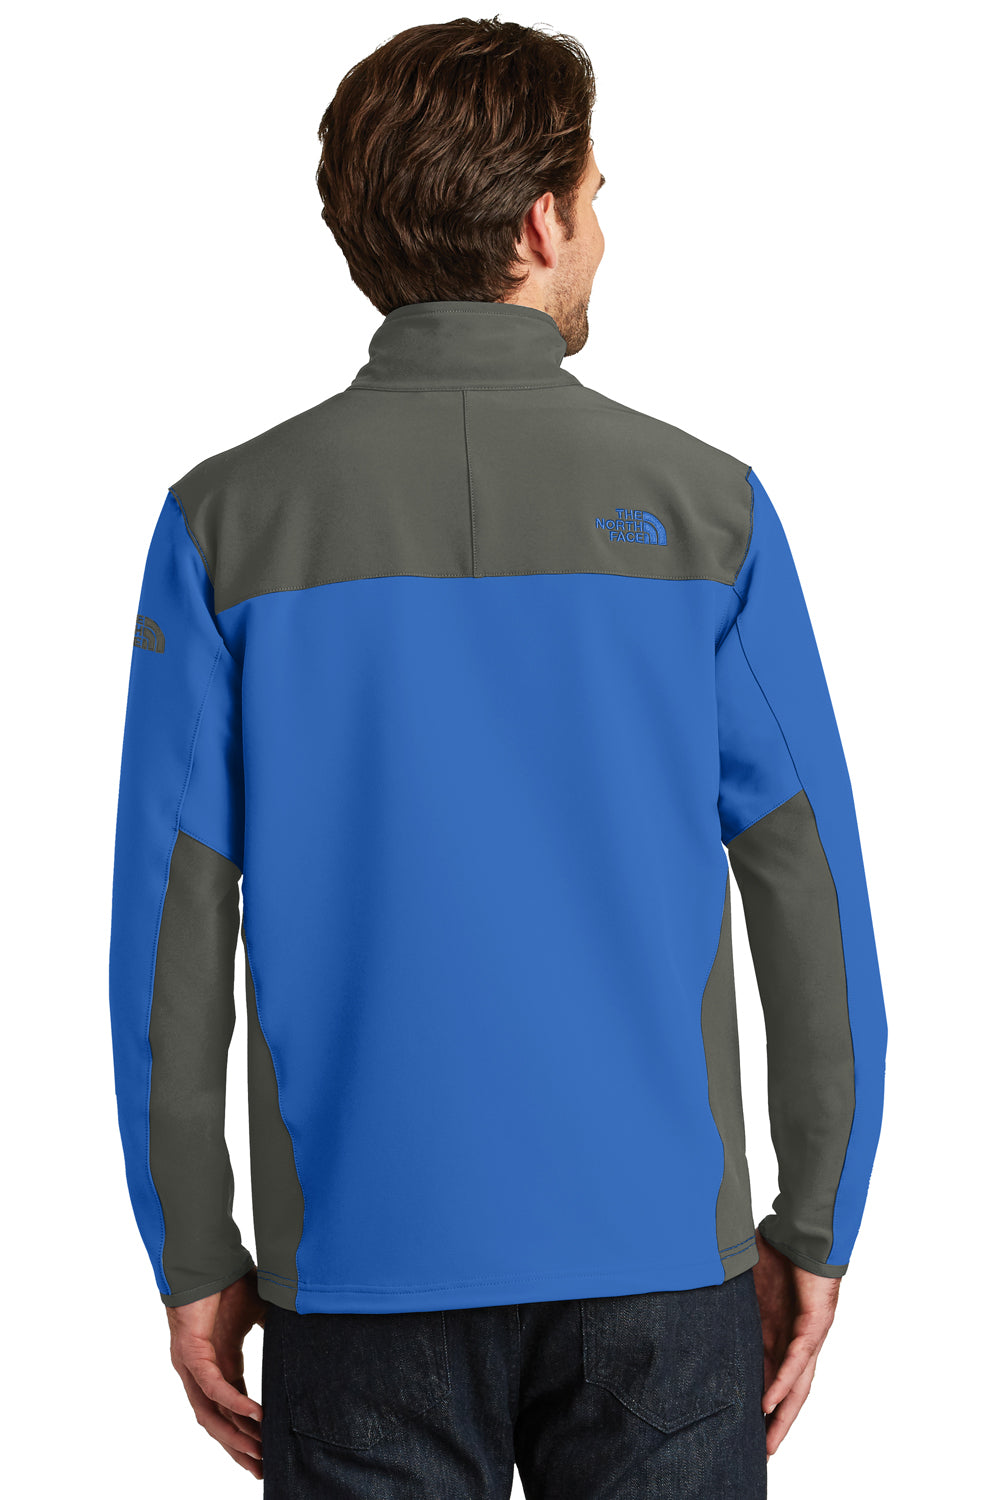 The North Face NF0A3LGV Mens Tech Wind & Water Resistant Full Zip Jacket Monster Blue/Asphalt Grey Back